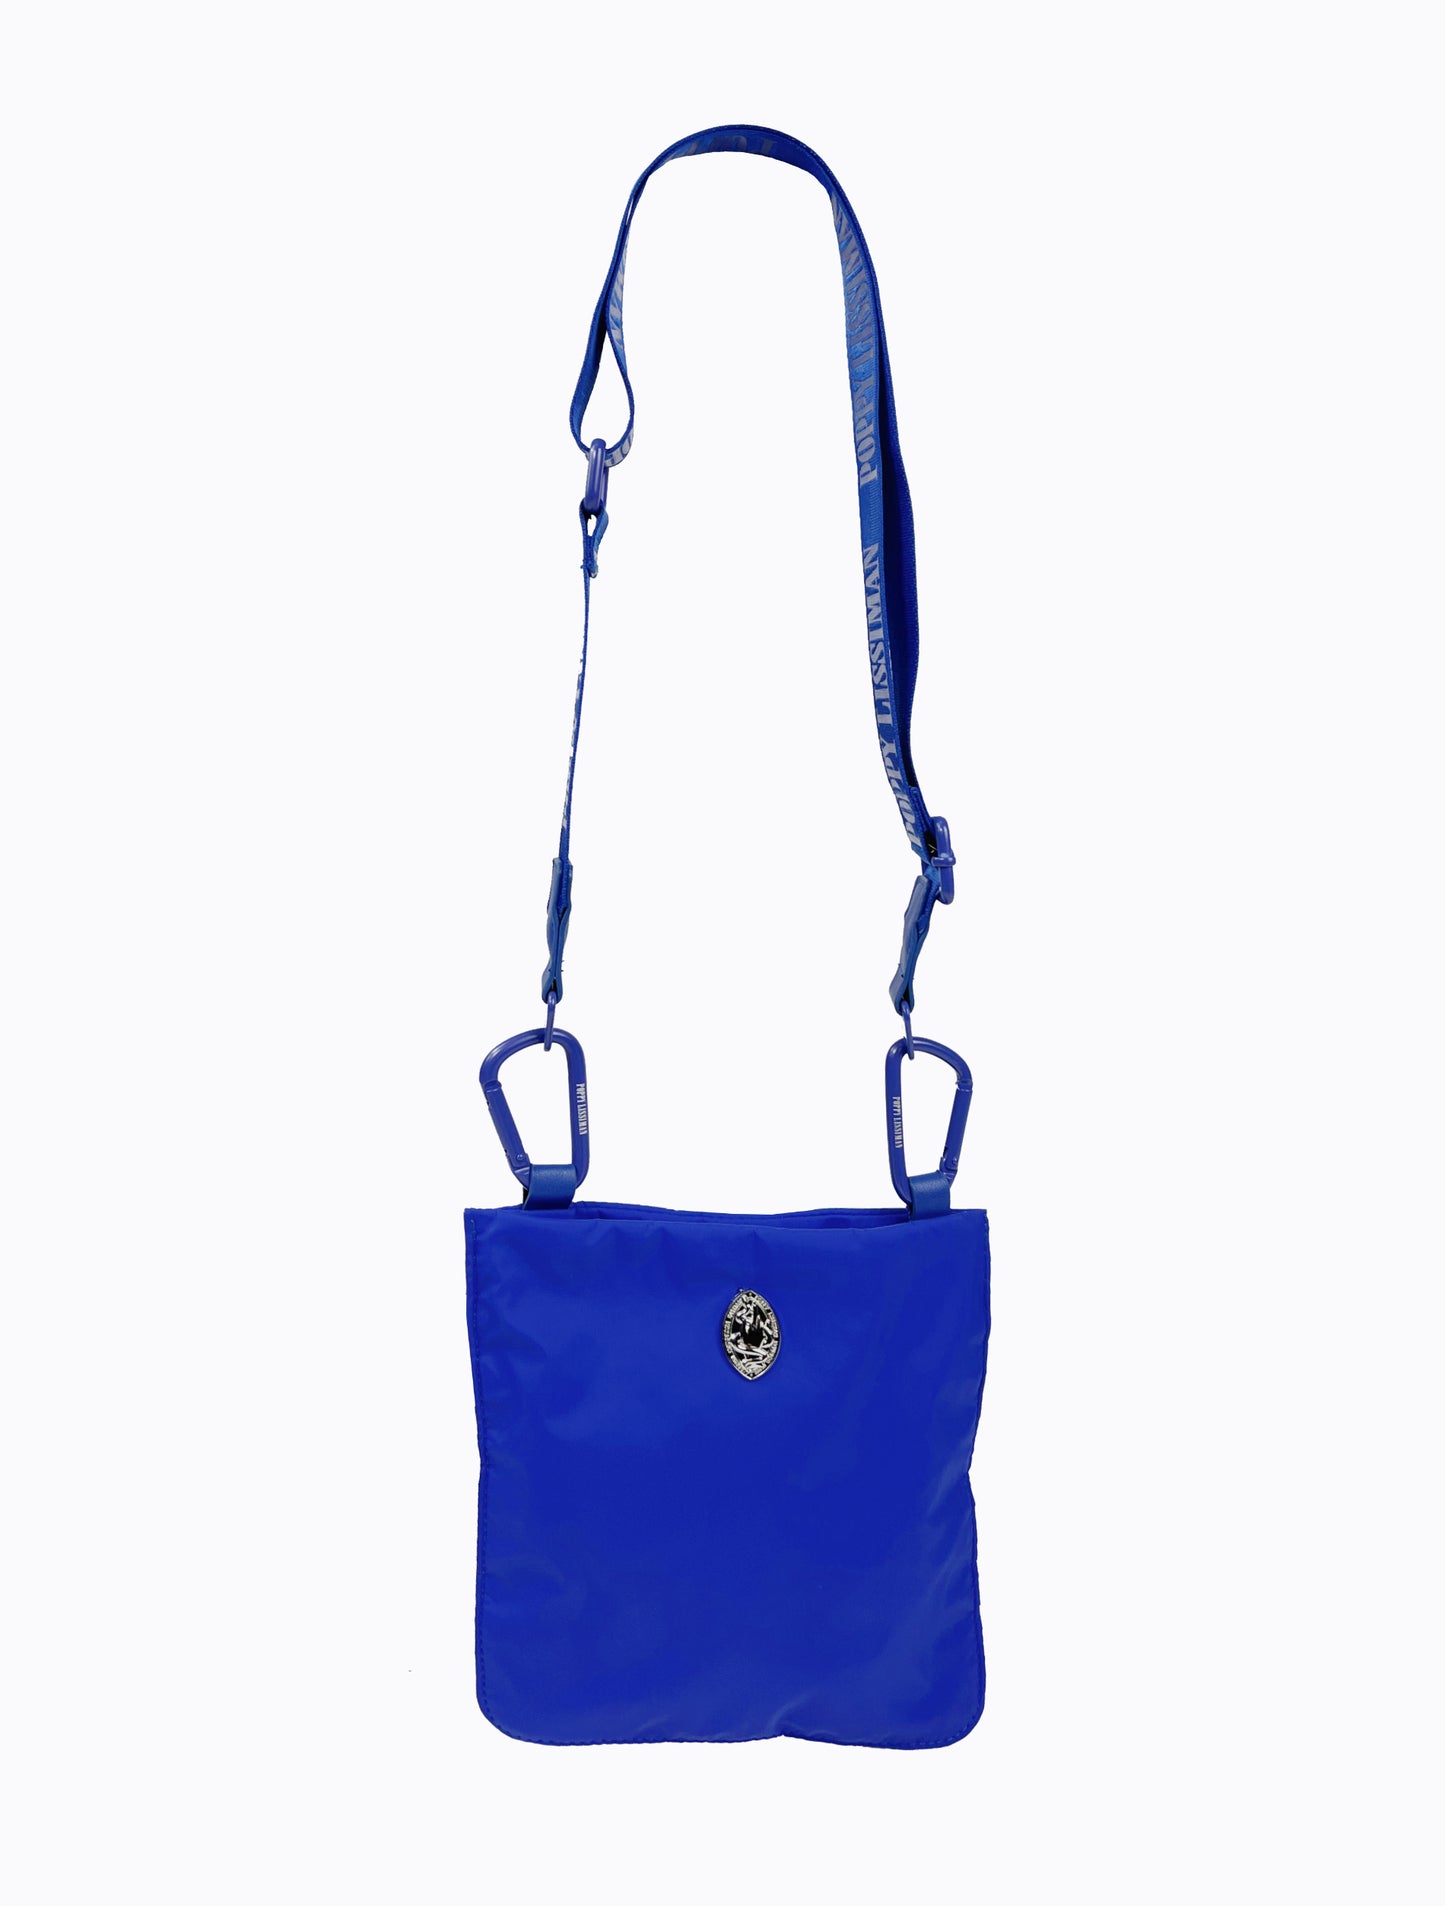 Jacques Shoulder Bag - Electric Blue